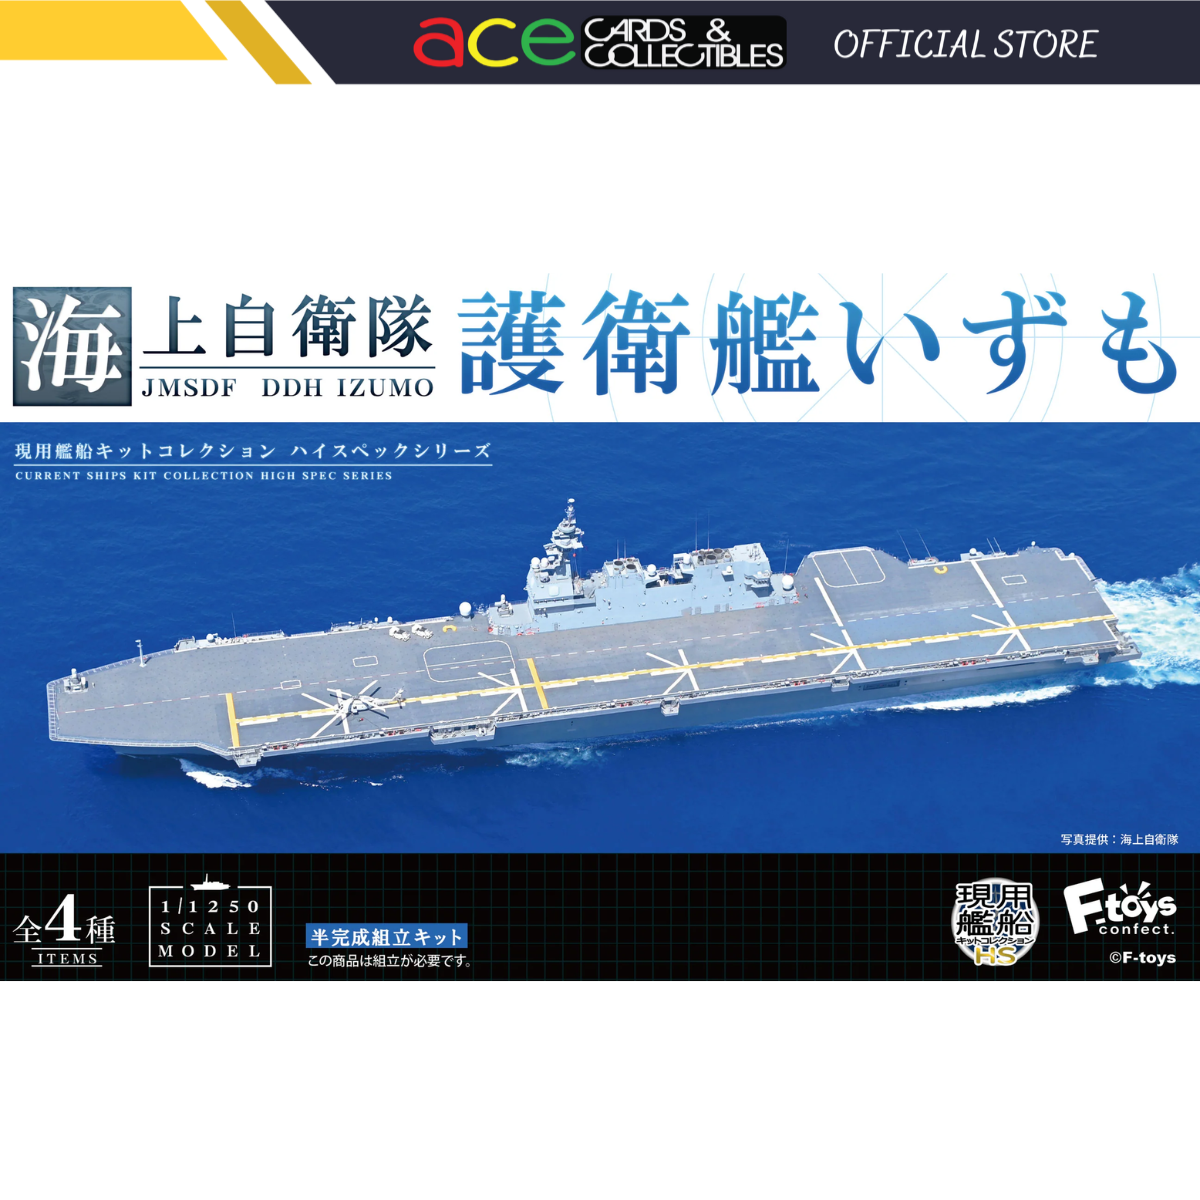 Japan Maritime Self-Defense Force DDH Izumo-Single Box (Random)-F-toys confect-Ace Cards &amp; Collectibles